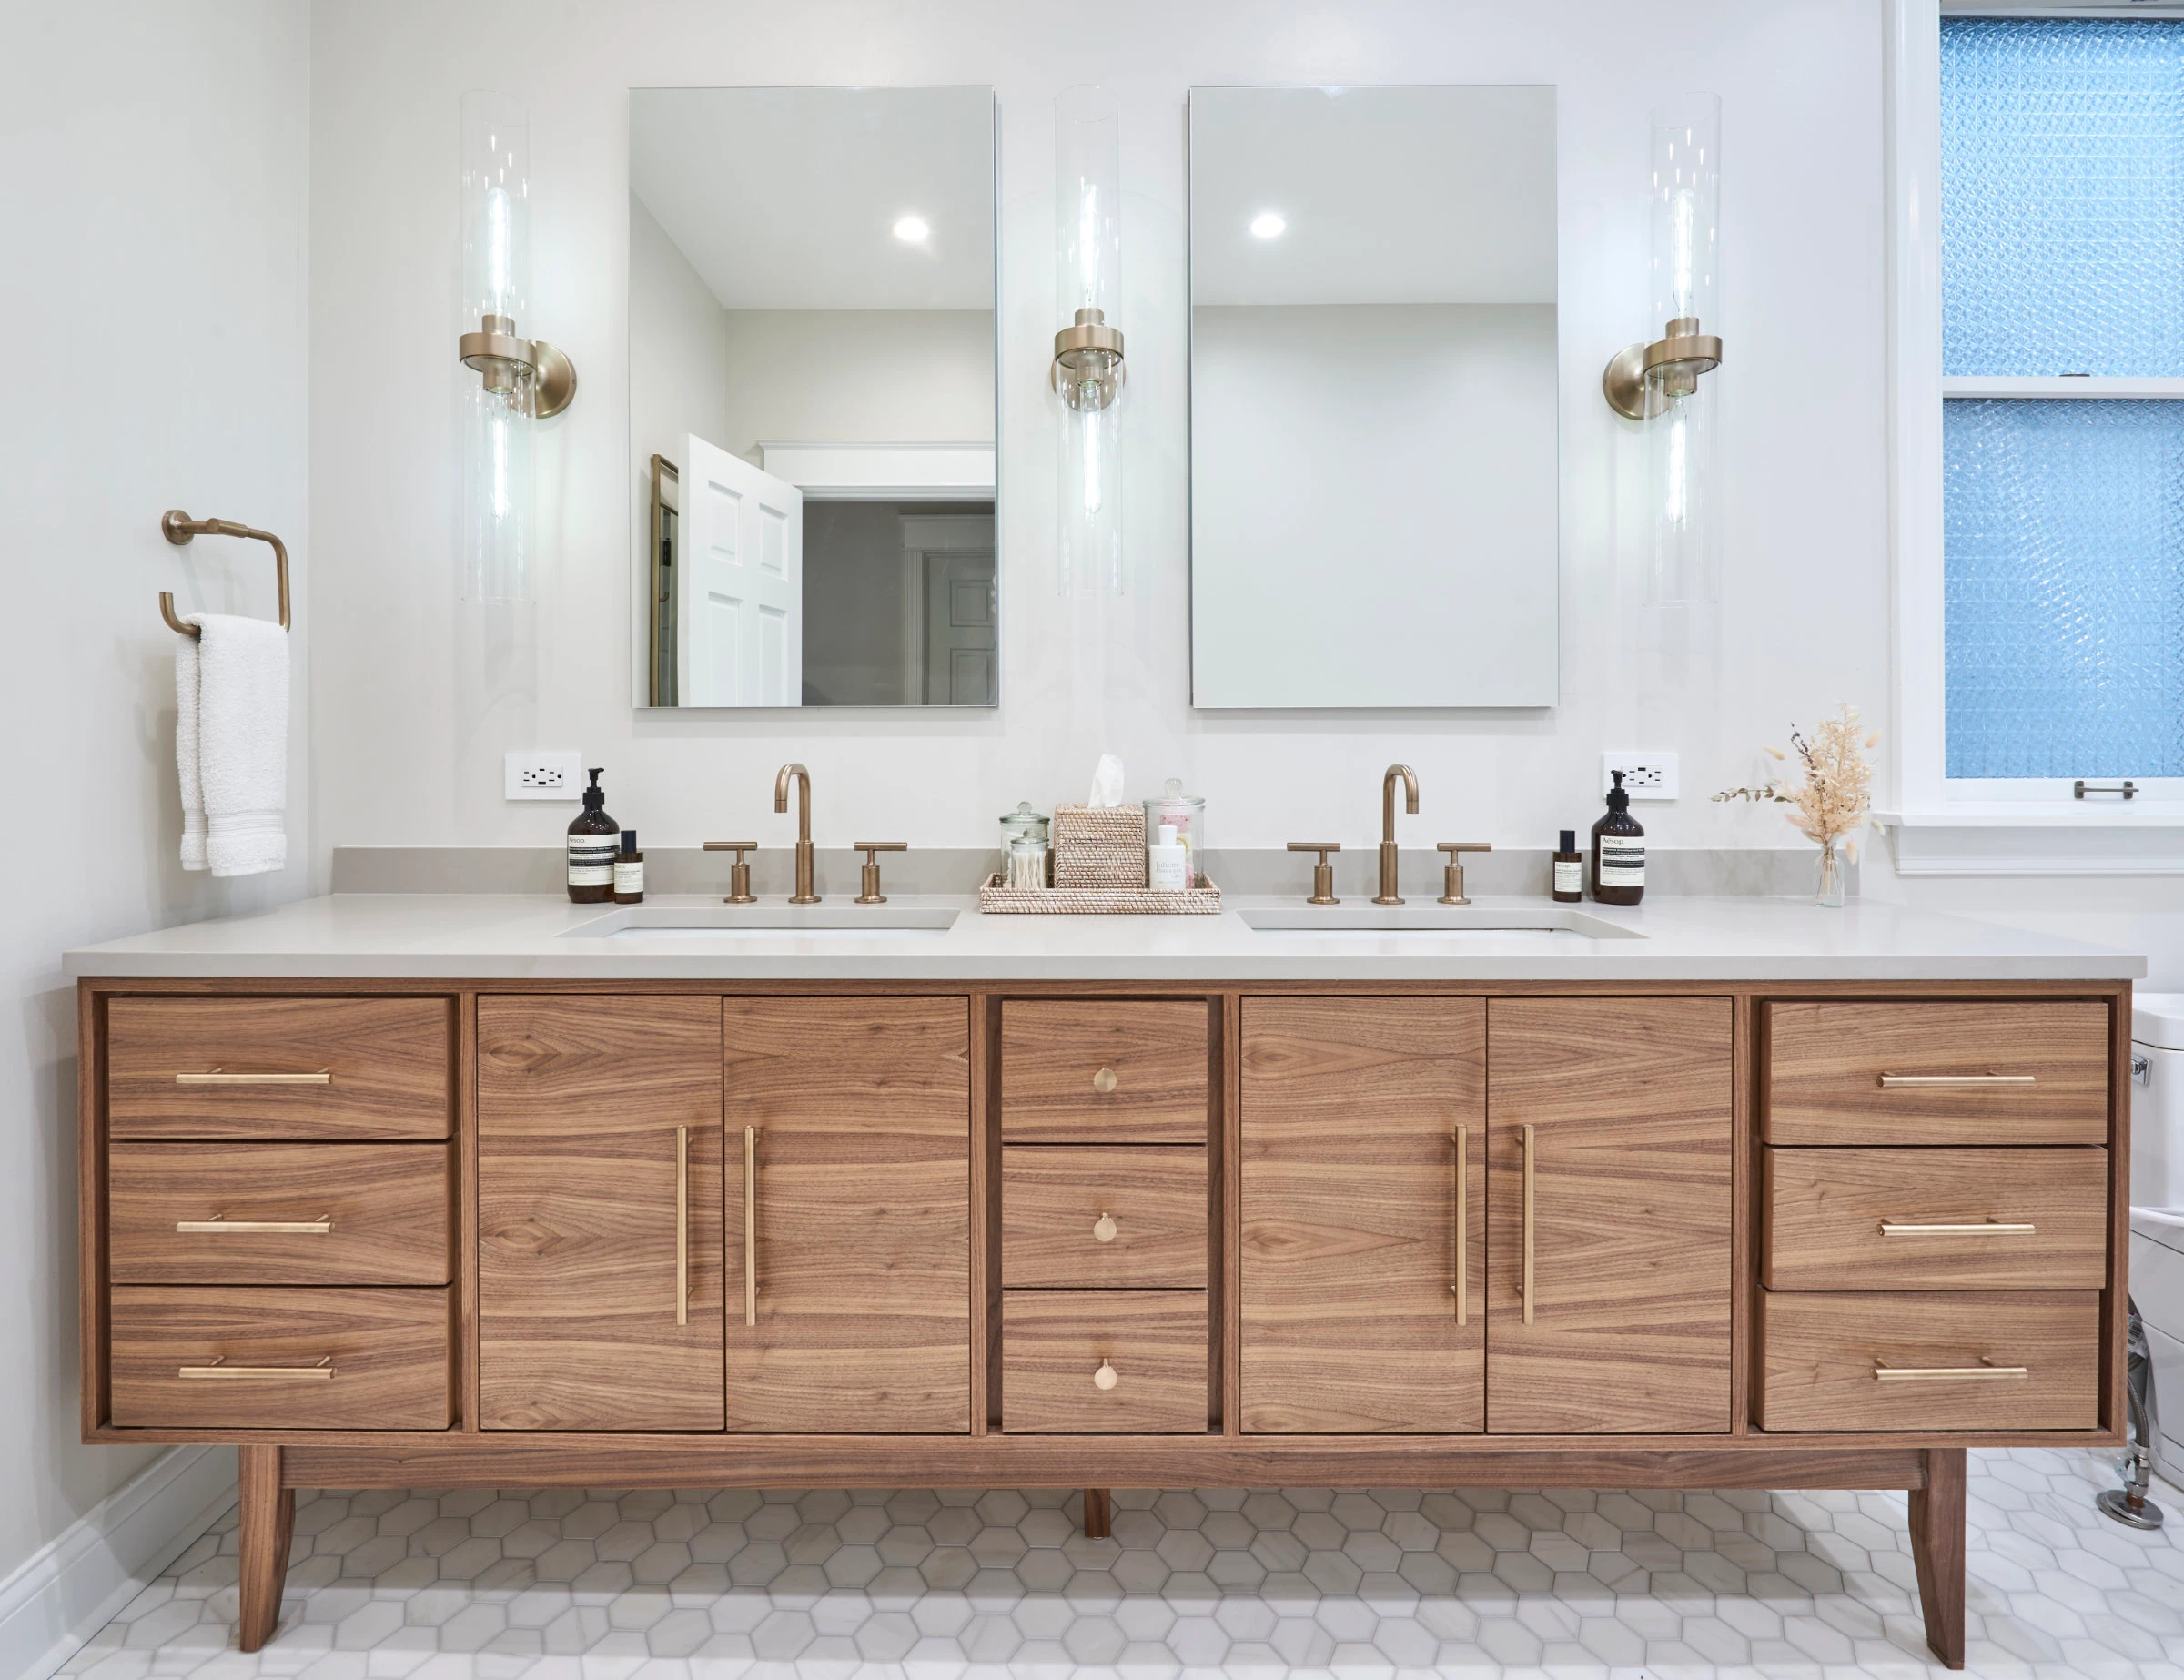 Draftwood Design double vanity